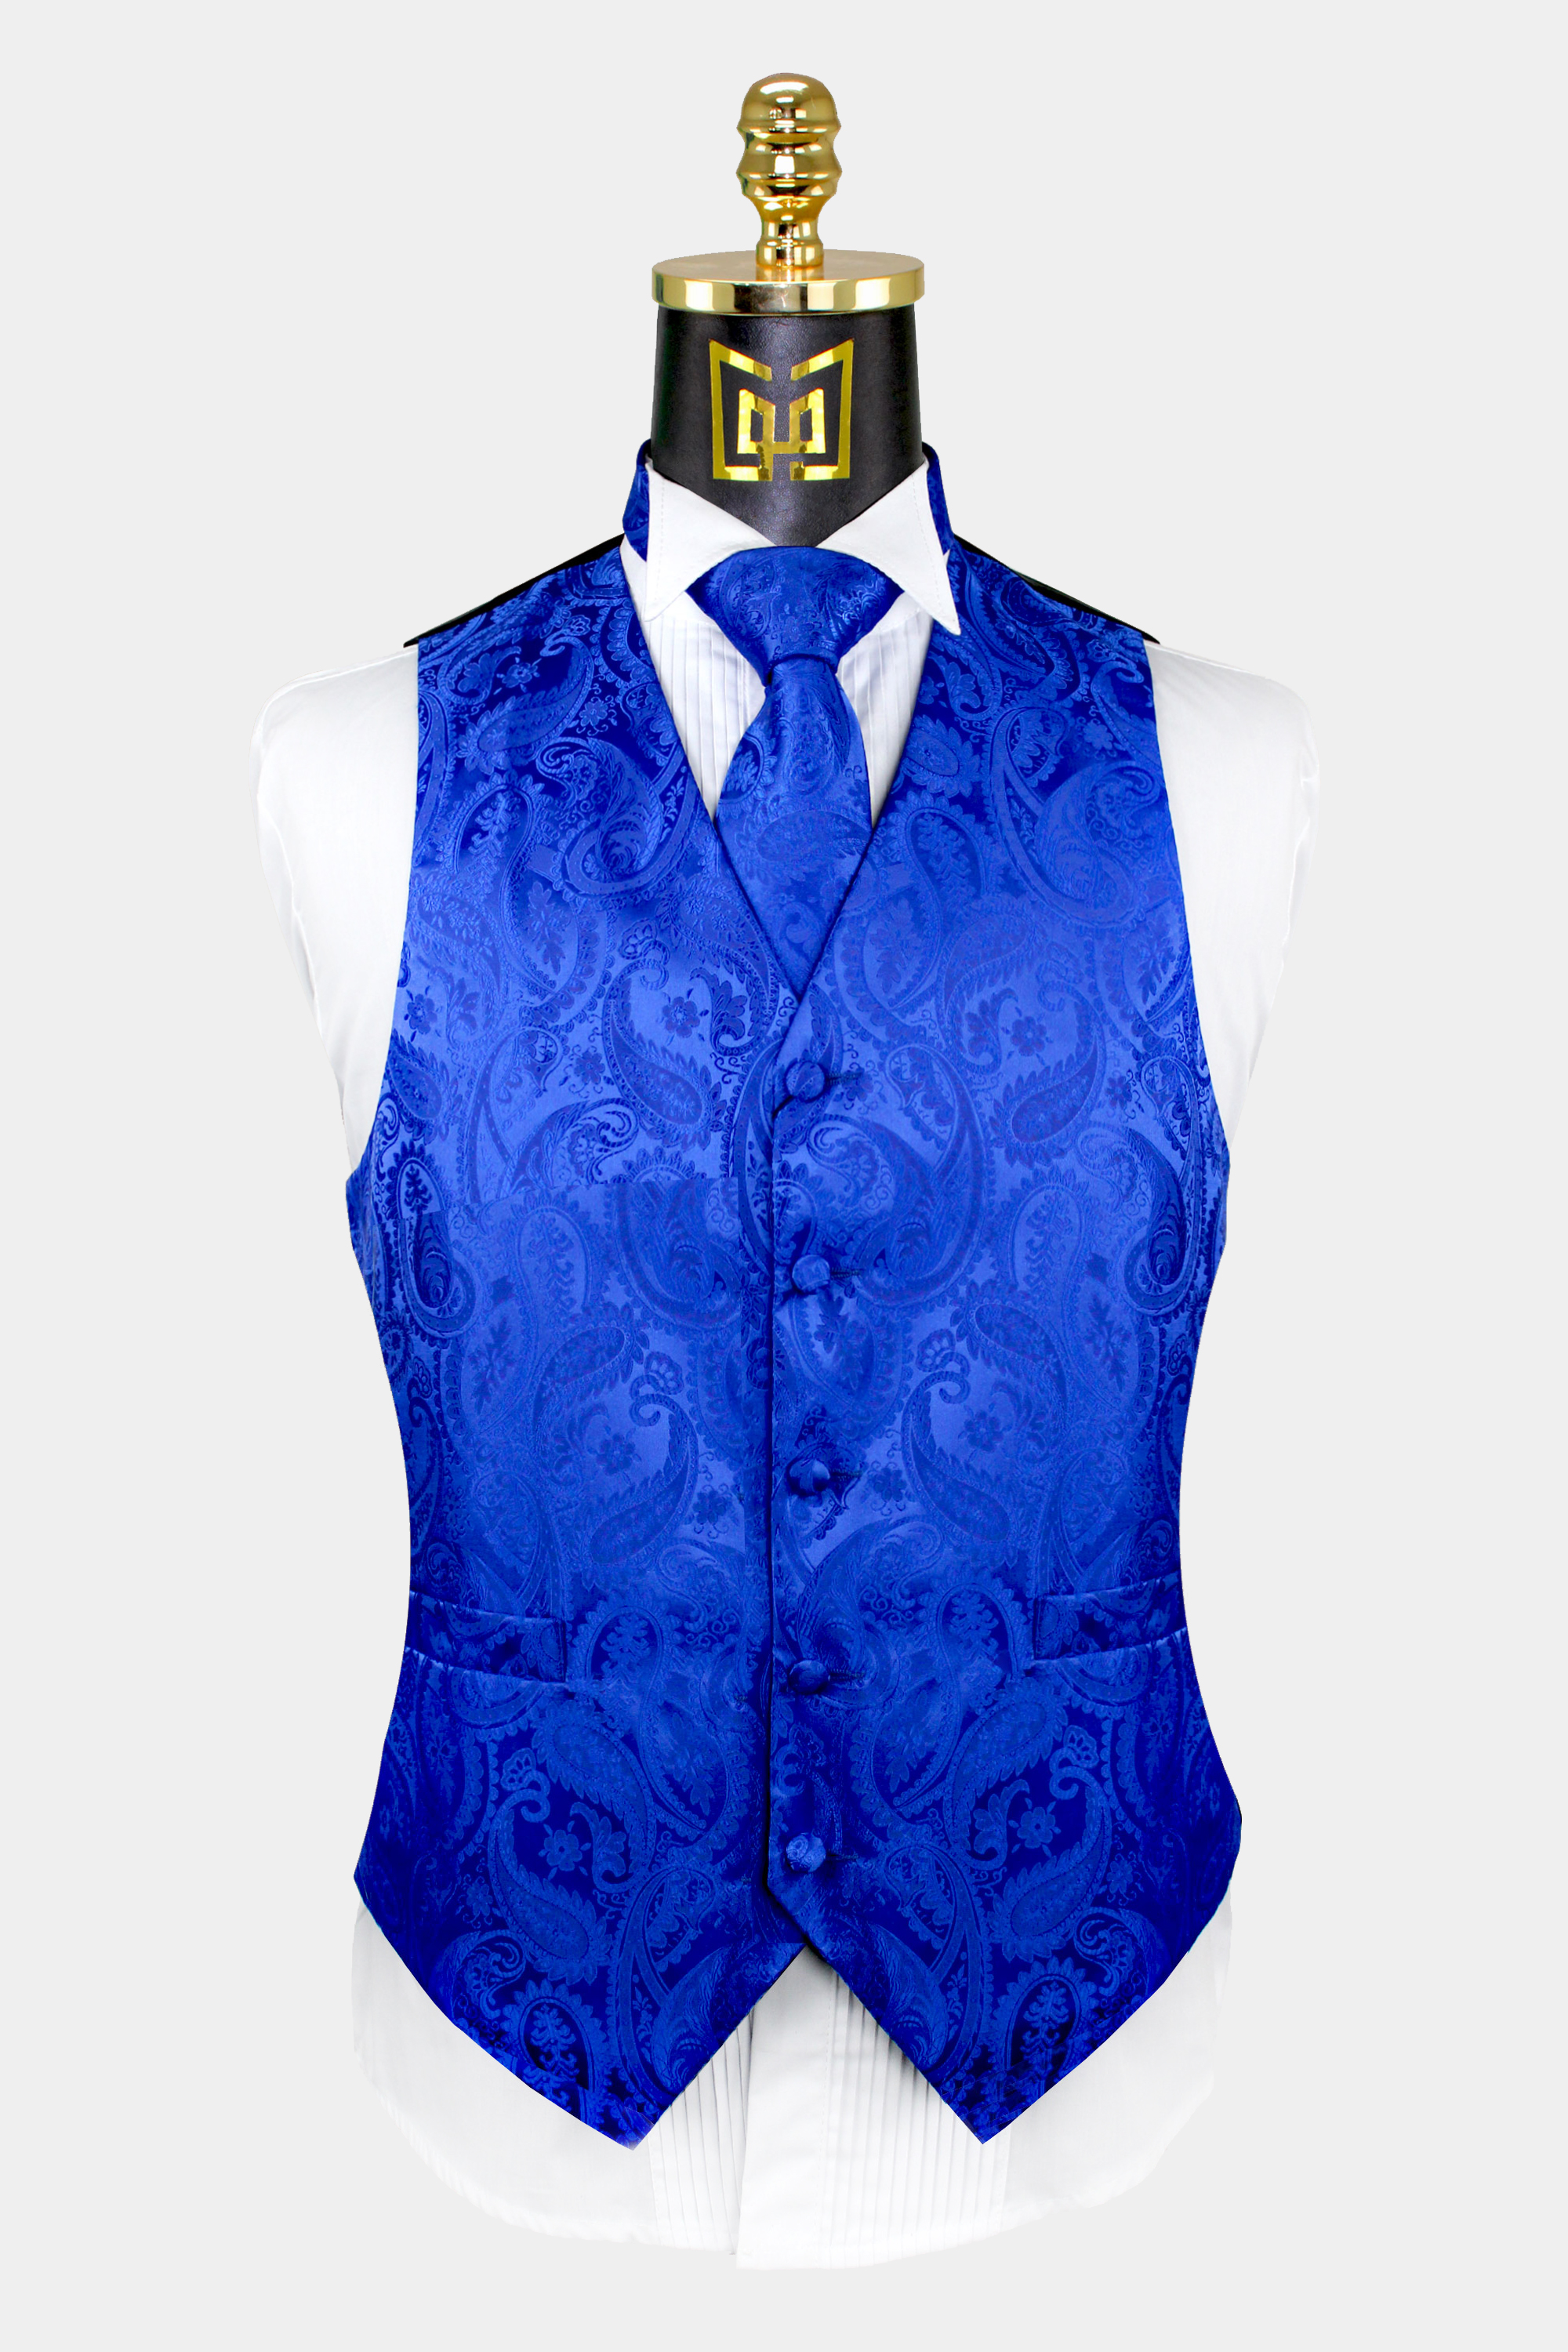 Mens-Royal-Blue-Paisley-Vest-and-Tie-Set-Groom-Tuxedo-Wedding-Vest-from-Gentlemansguru.com_